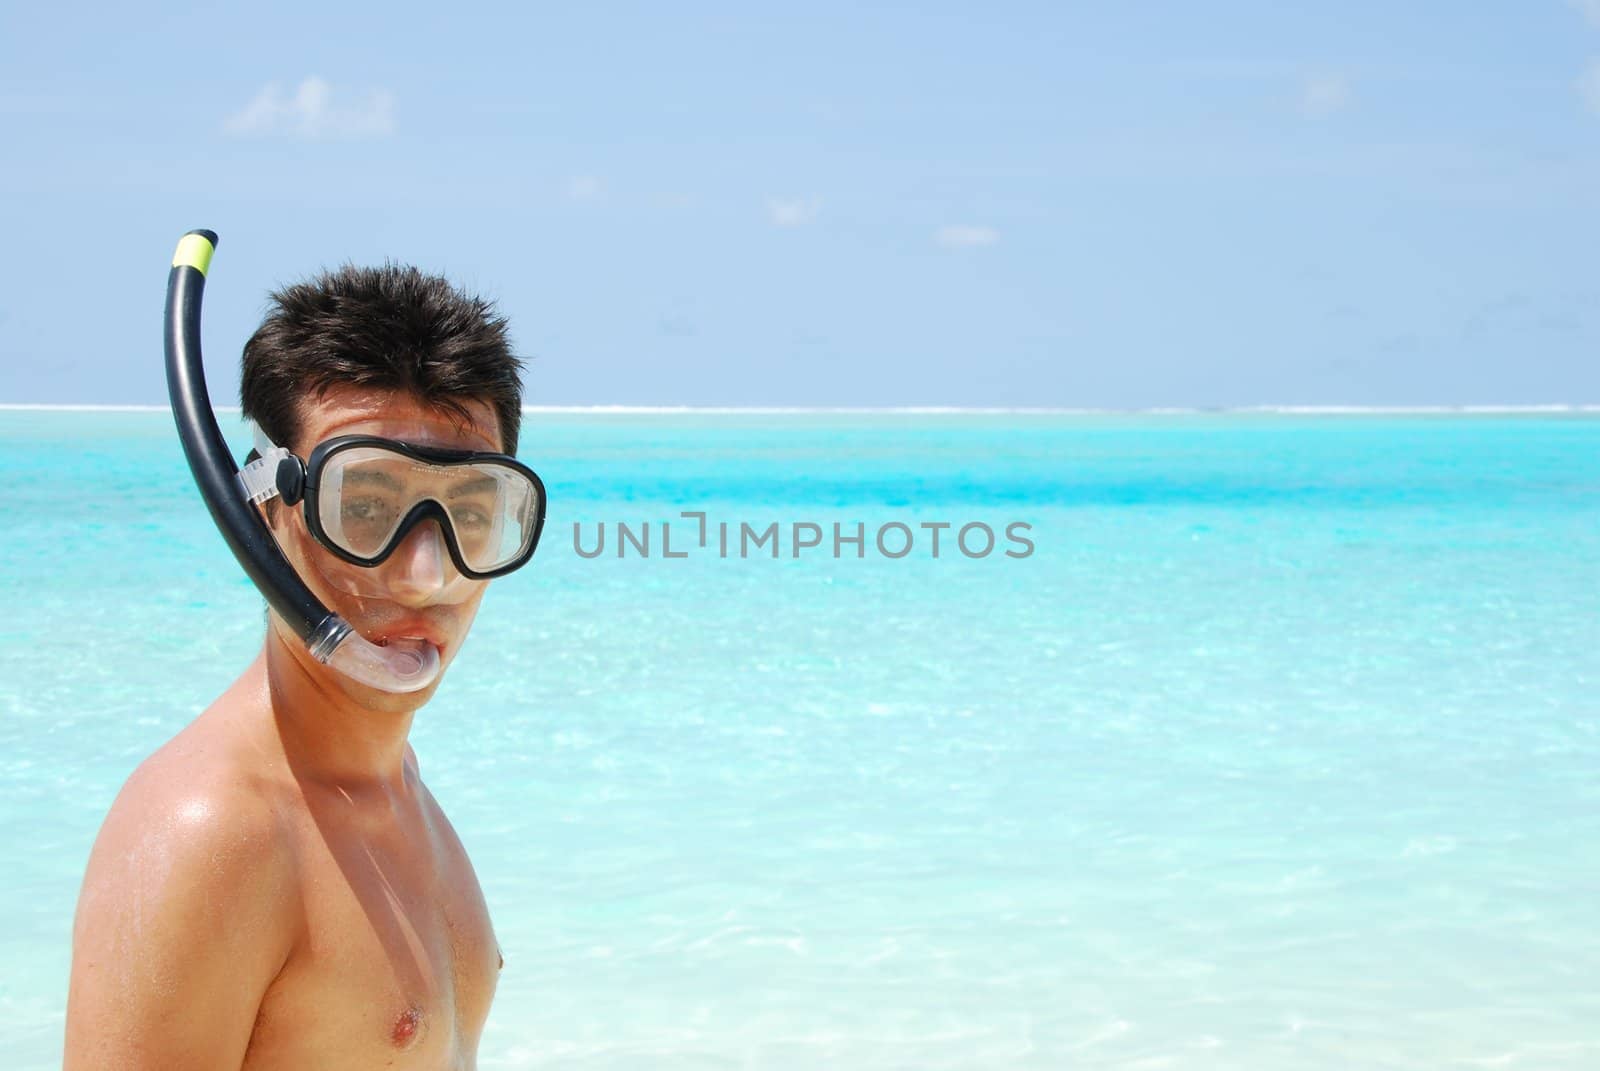 closeup of a young snorkeler man in a tropical island